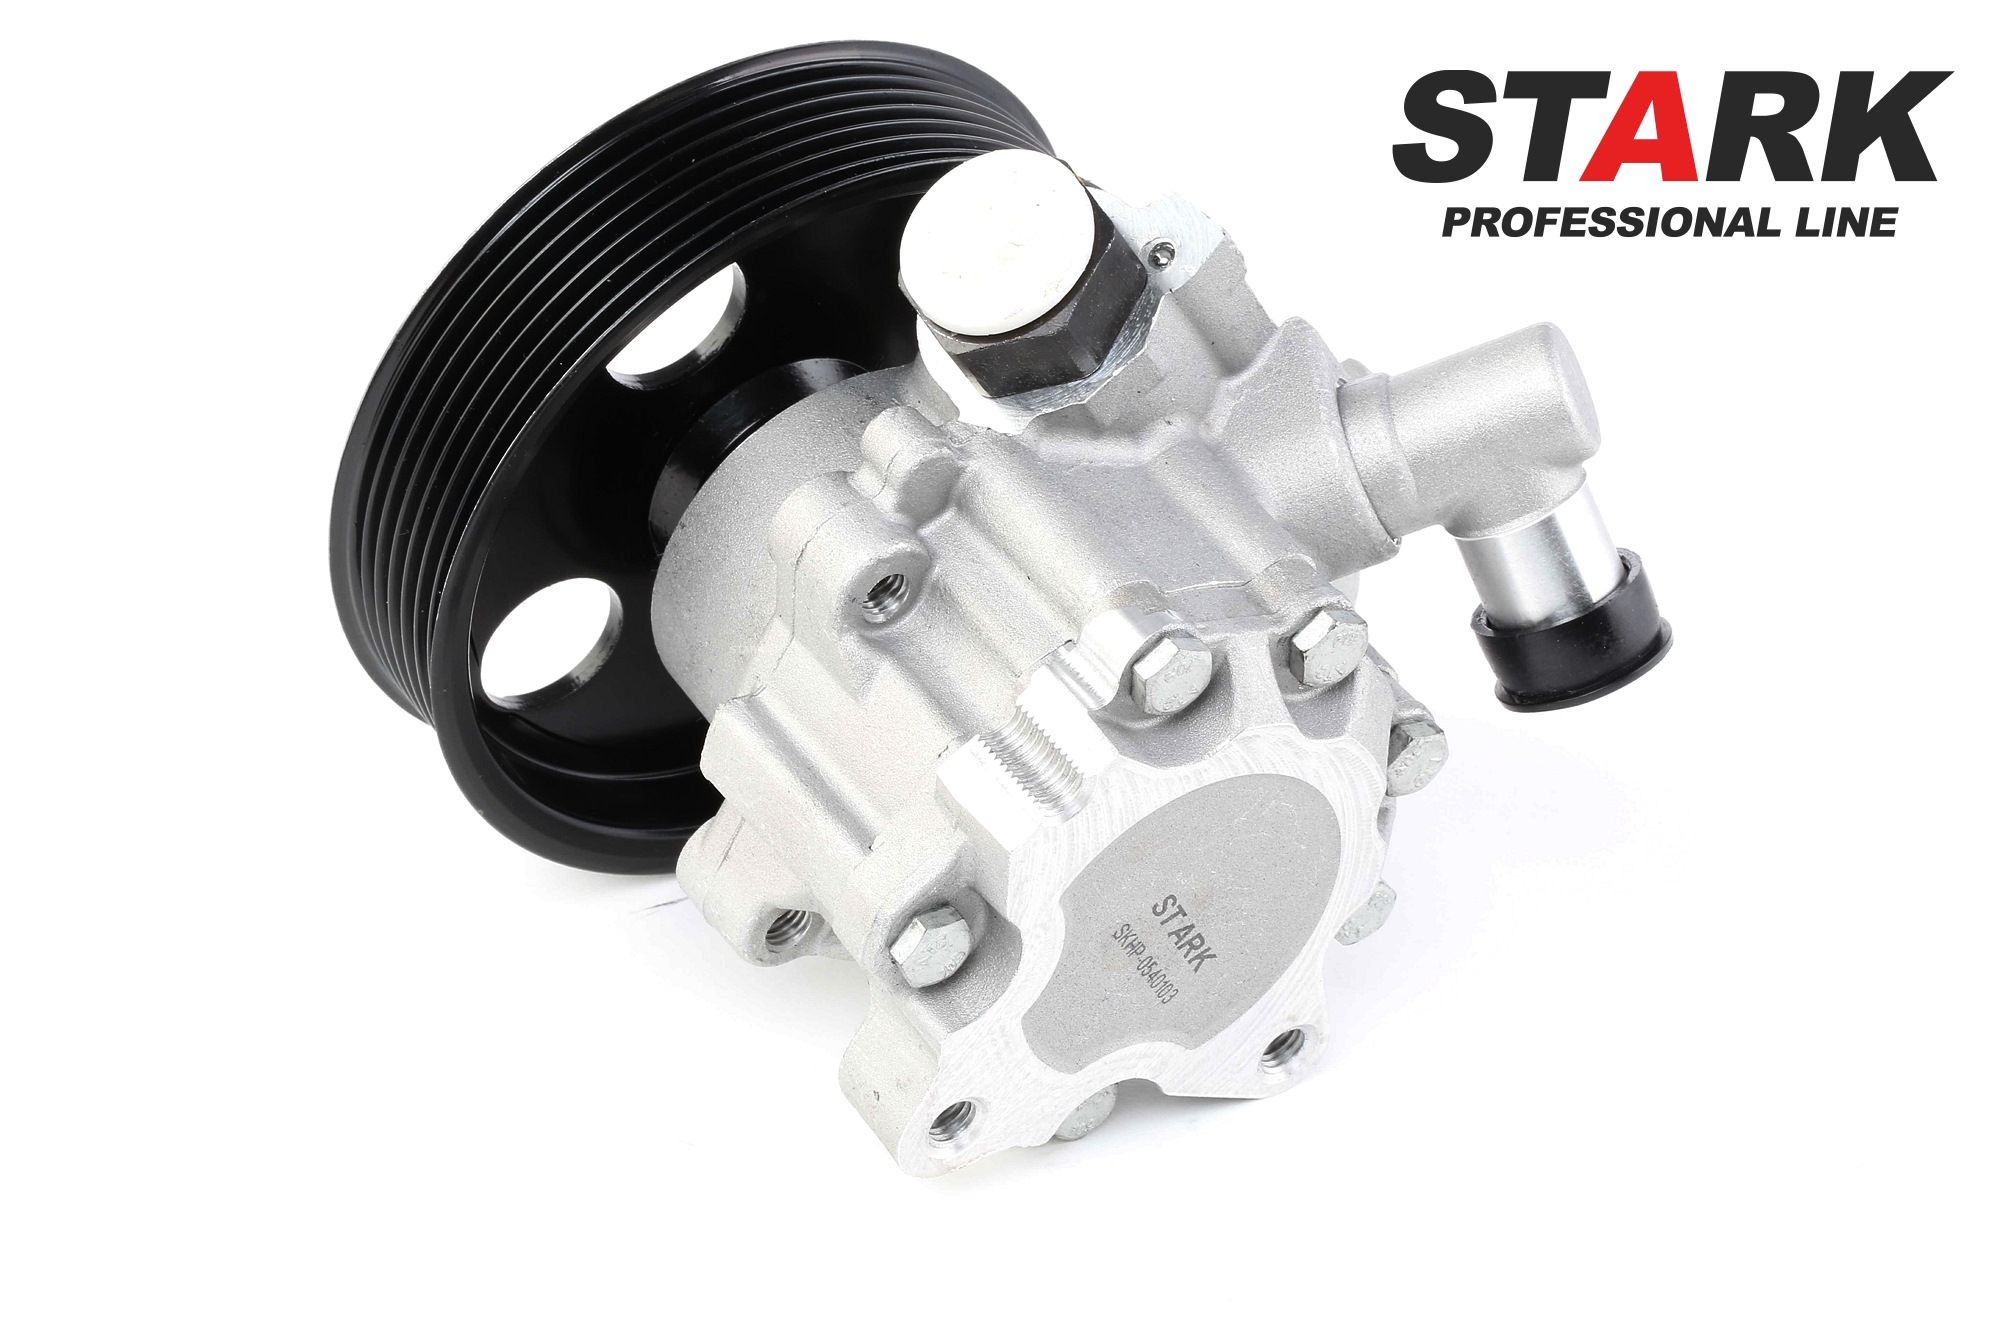 STARK SKHP-0540103 Power steering pump Hydraulic, 120 bar, Pressure-limiting Valve, M 16 x 1,5, Vane Pump, Clockwise rotation